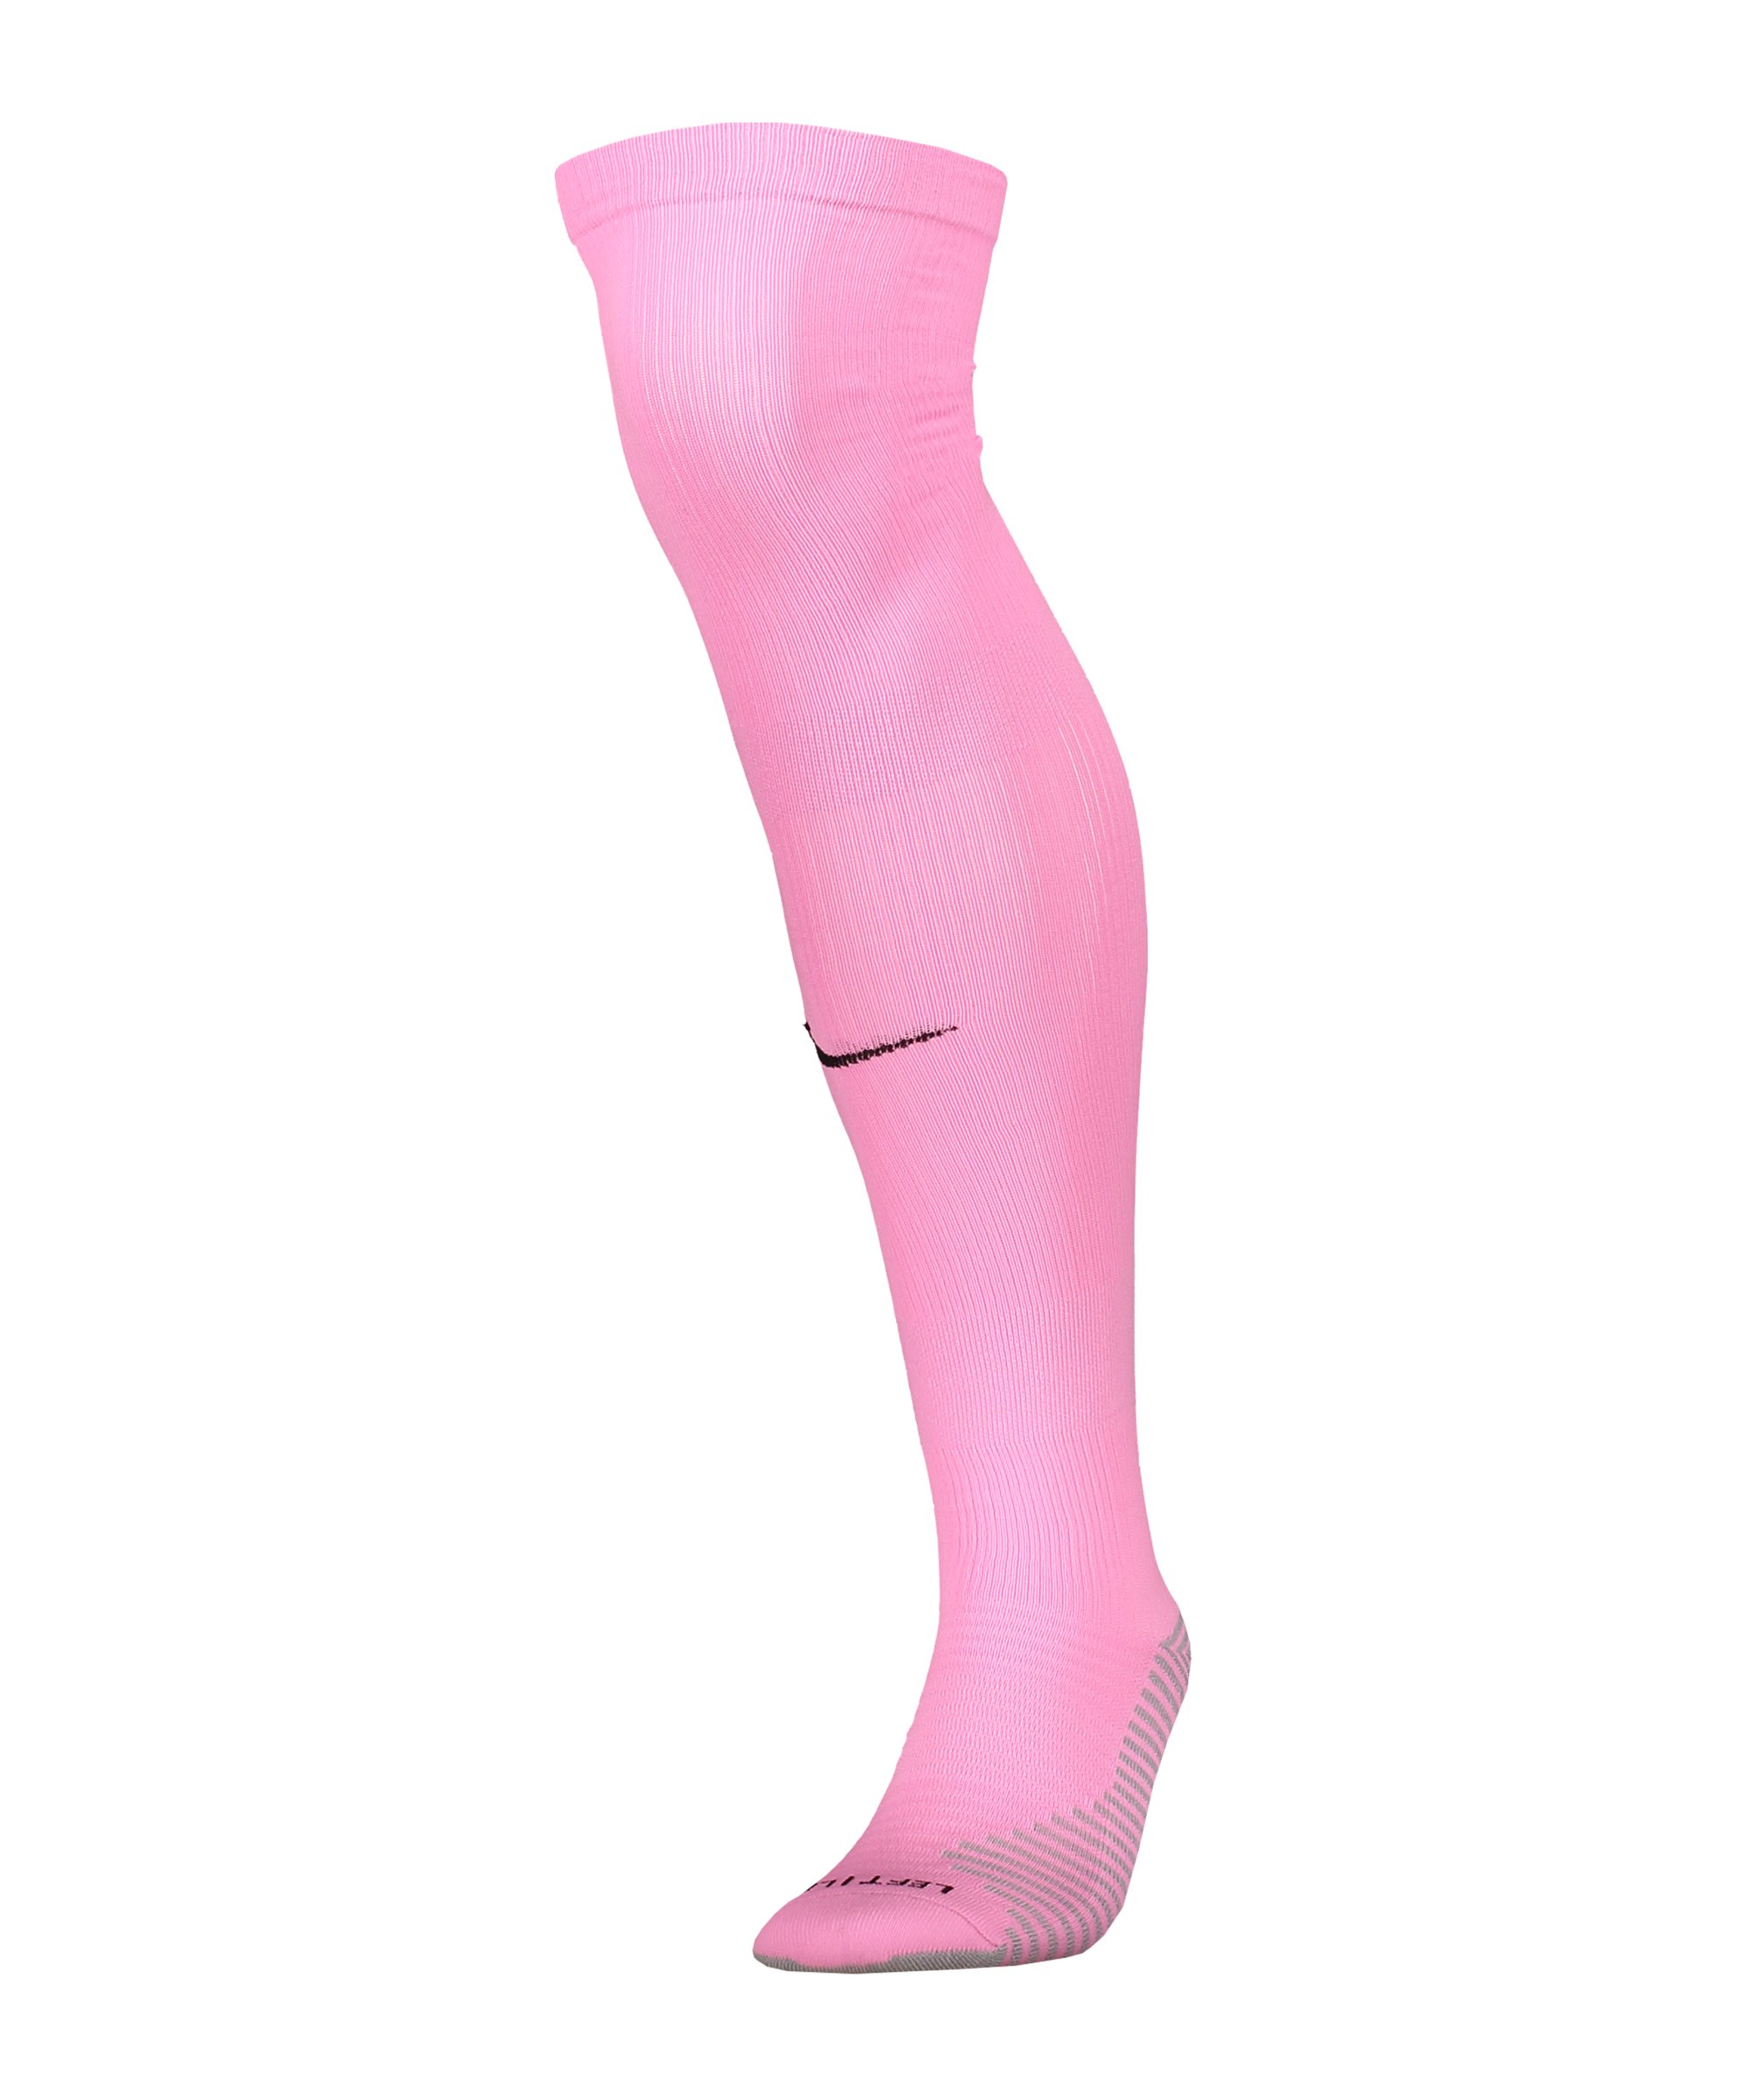 Nike Stadium TW-Strumpfstutzen Rosa F610 - rosa